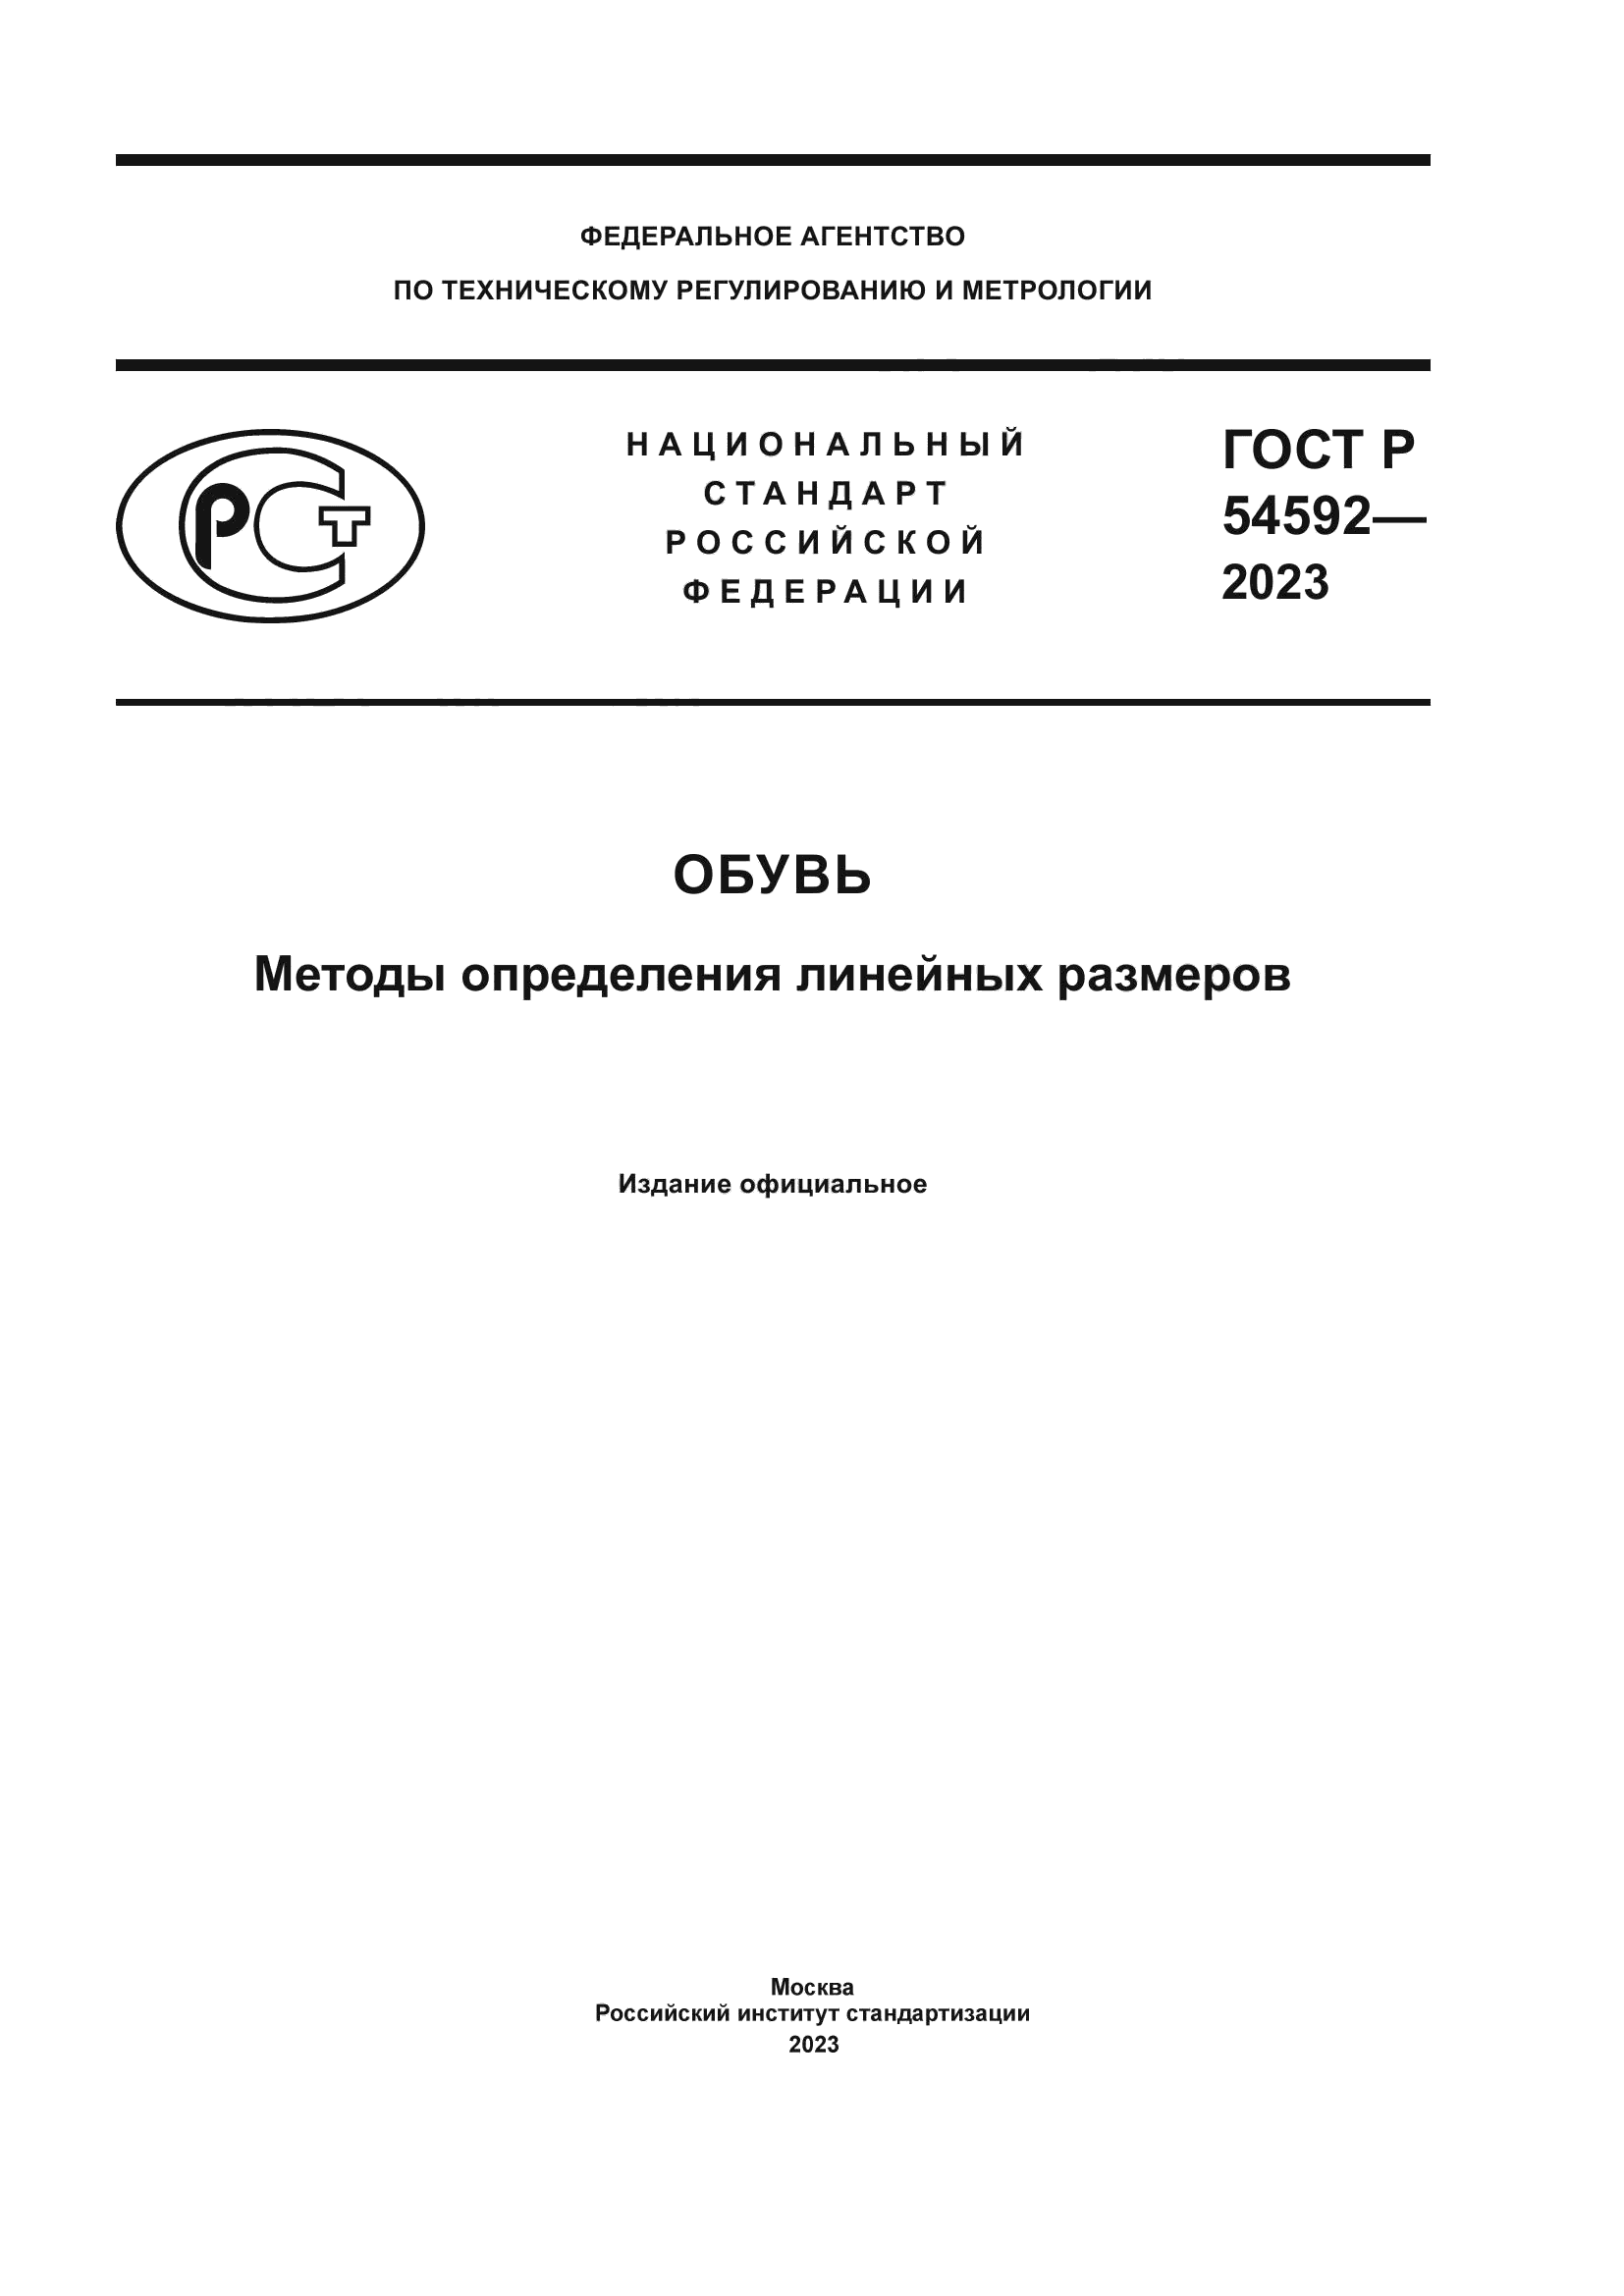 ГОСТ Р 54592-2023